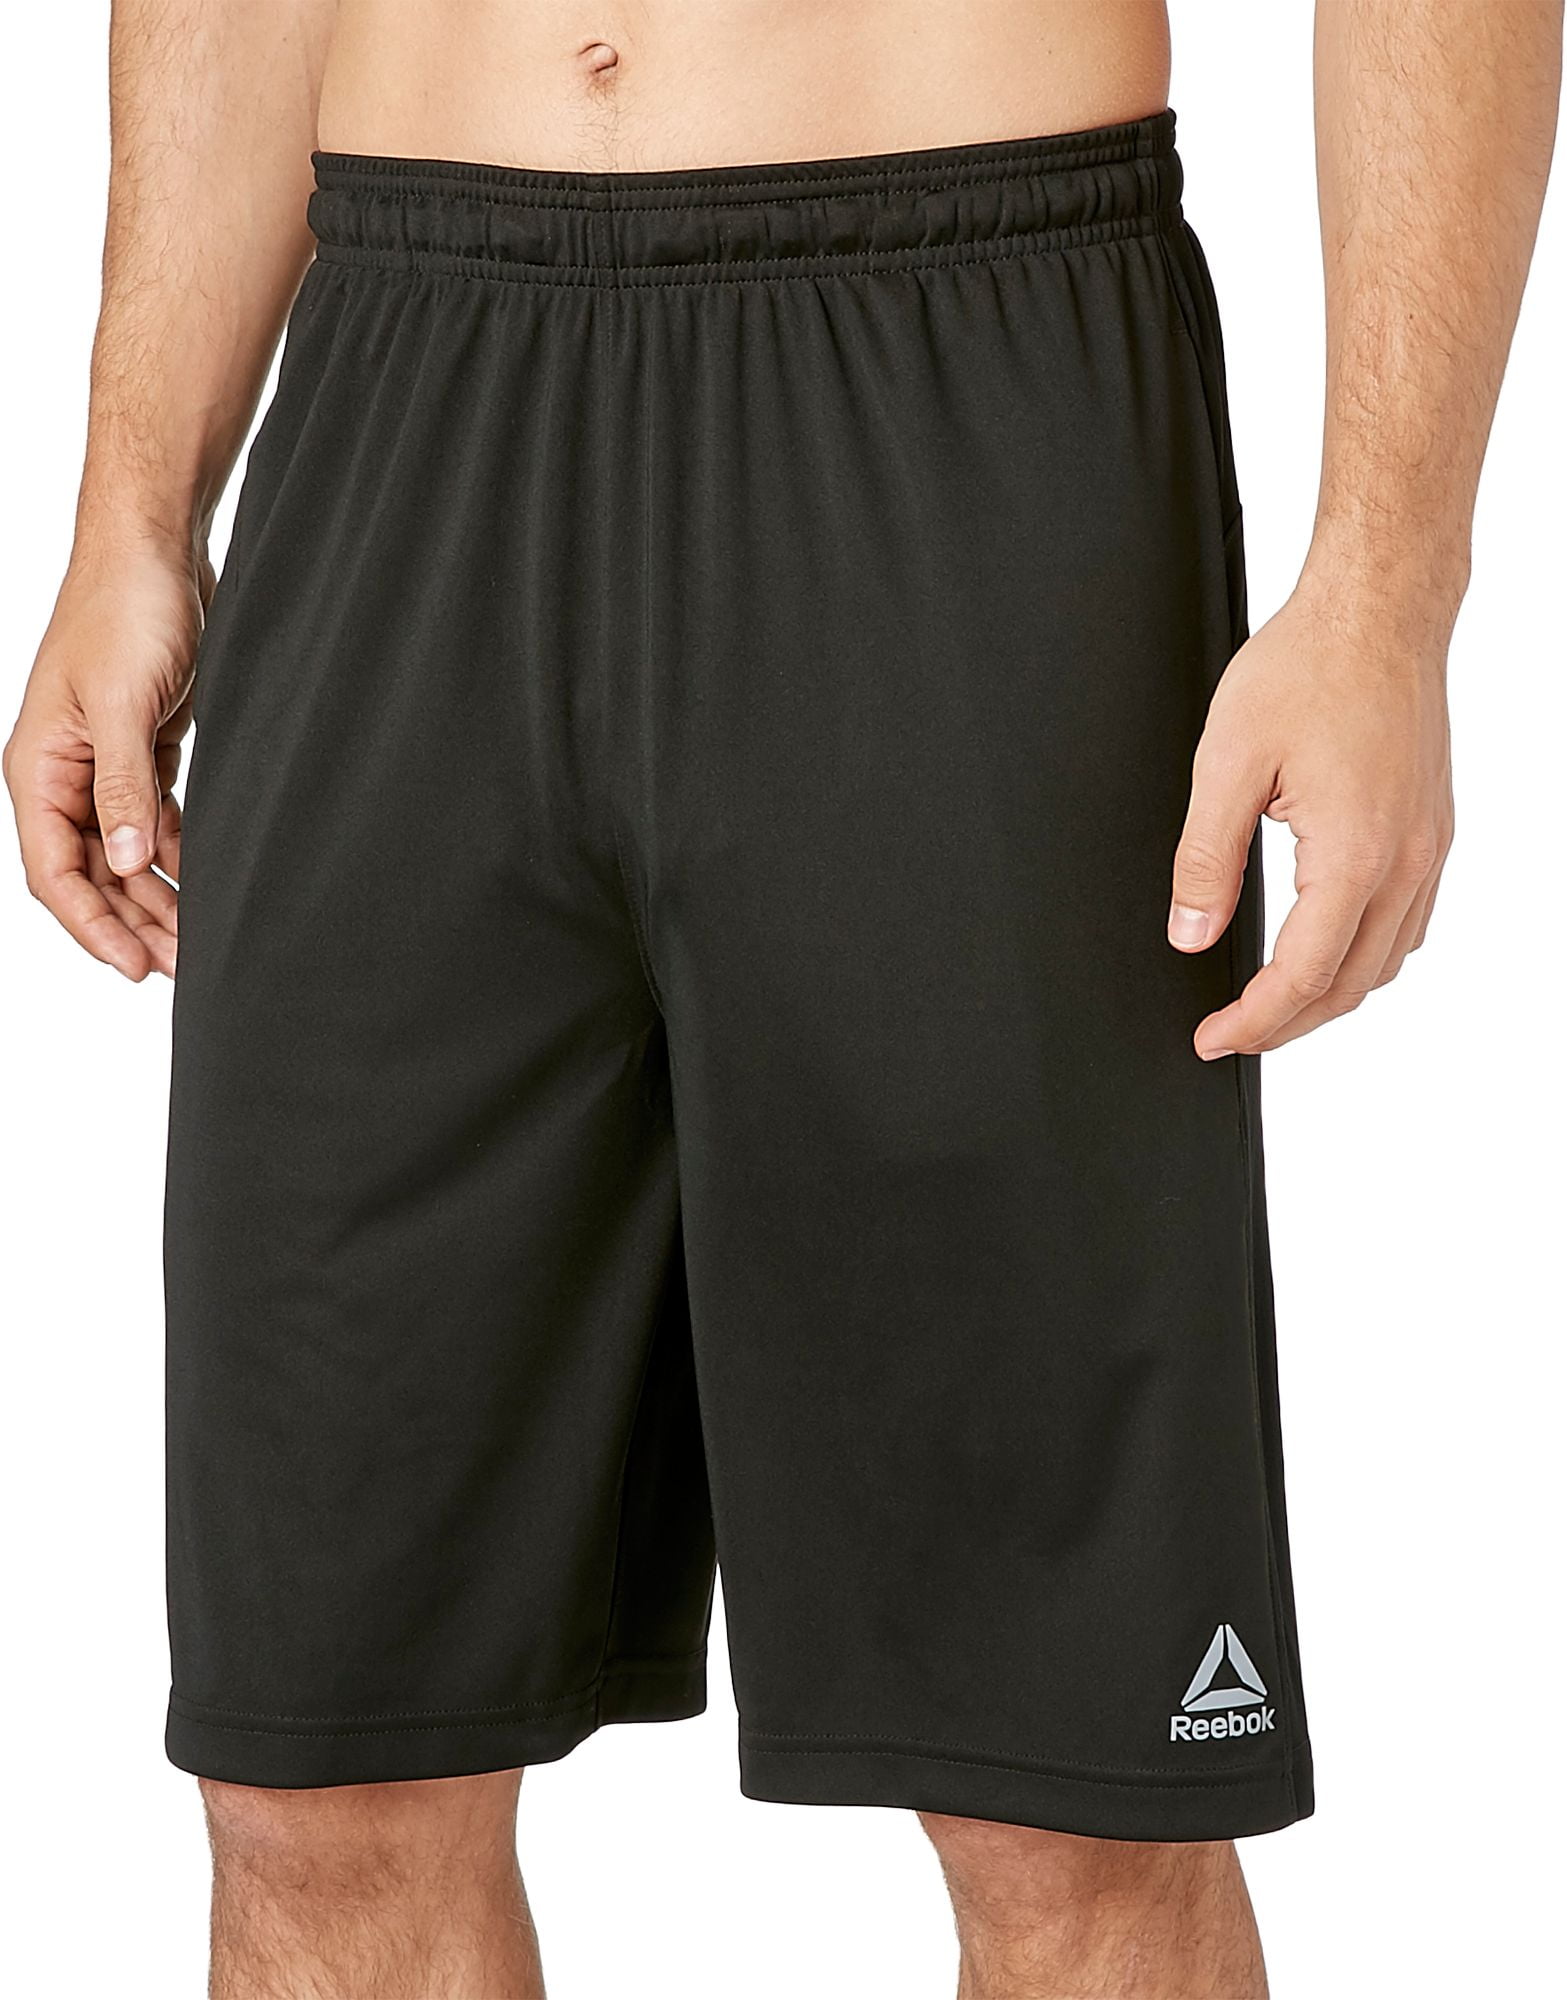 reebok solid men's sports shorts